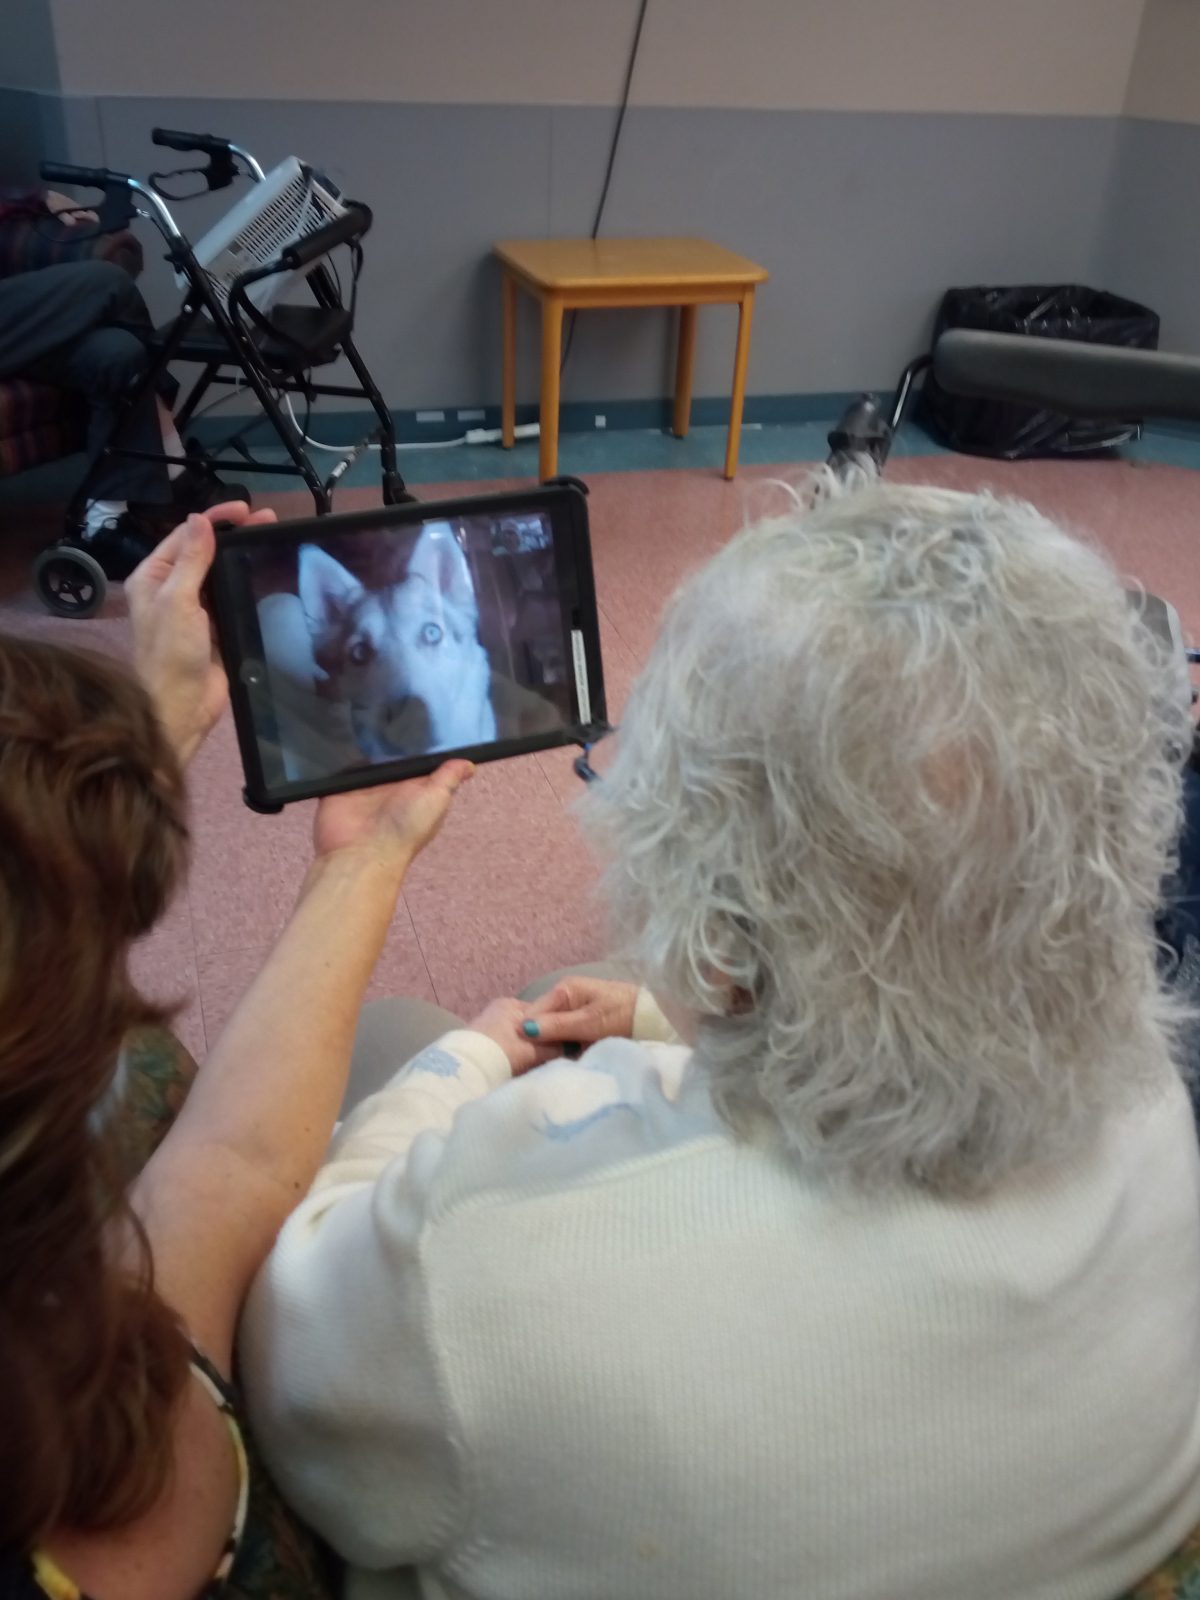 Donated iPads support seniors